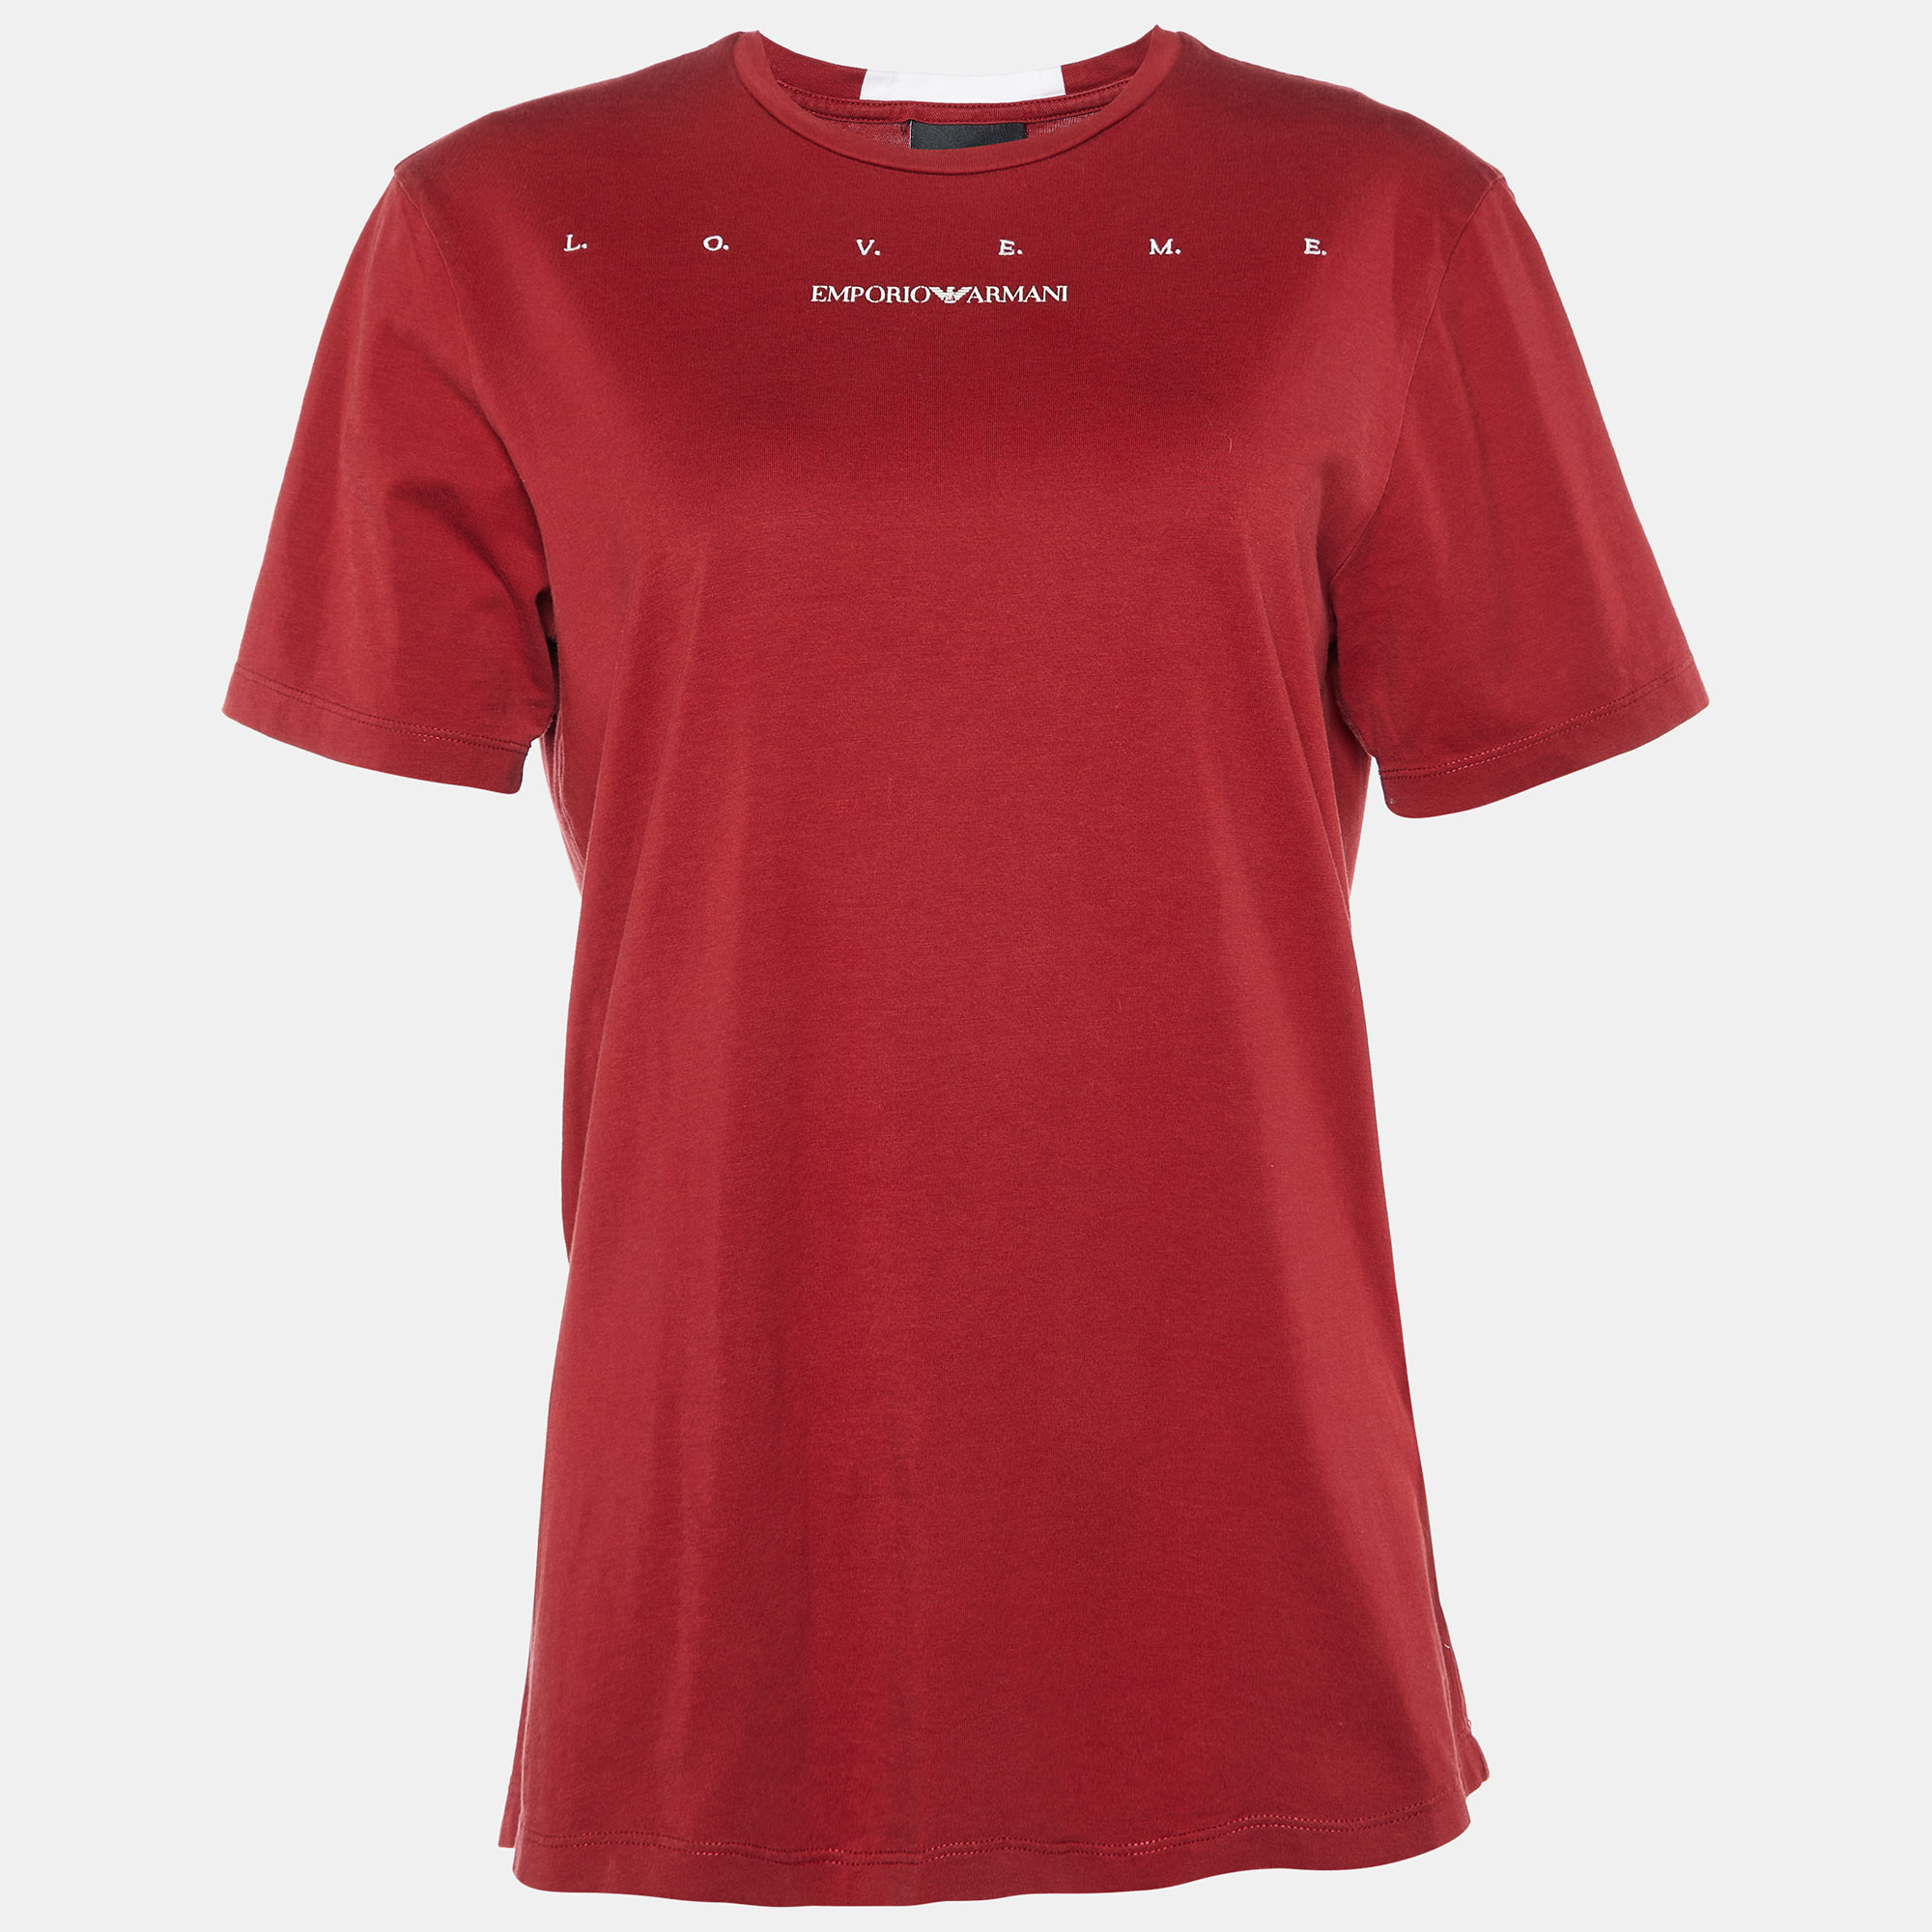 

Emporio Armani Red Embroidered Cotton Crew Neck T-Shirt M